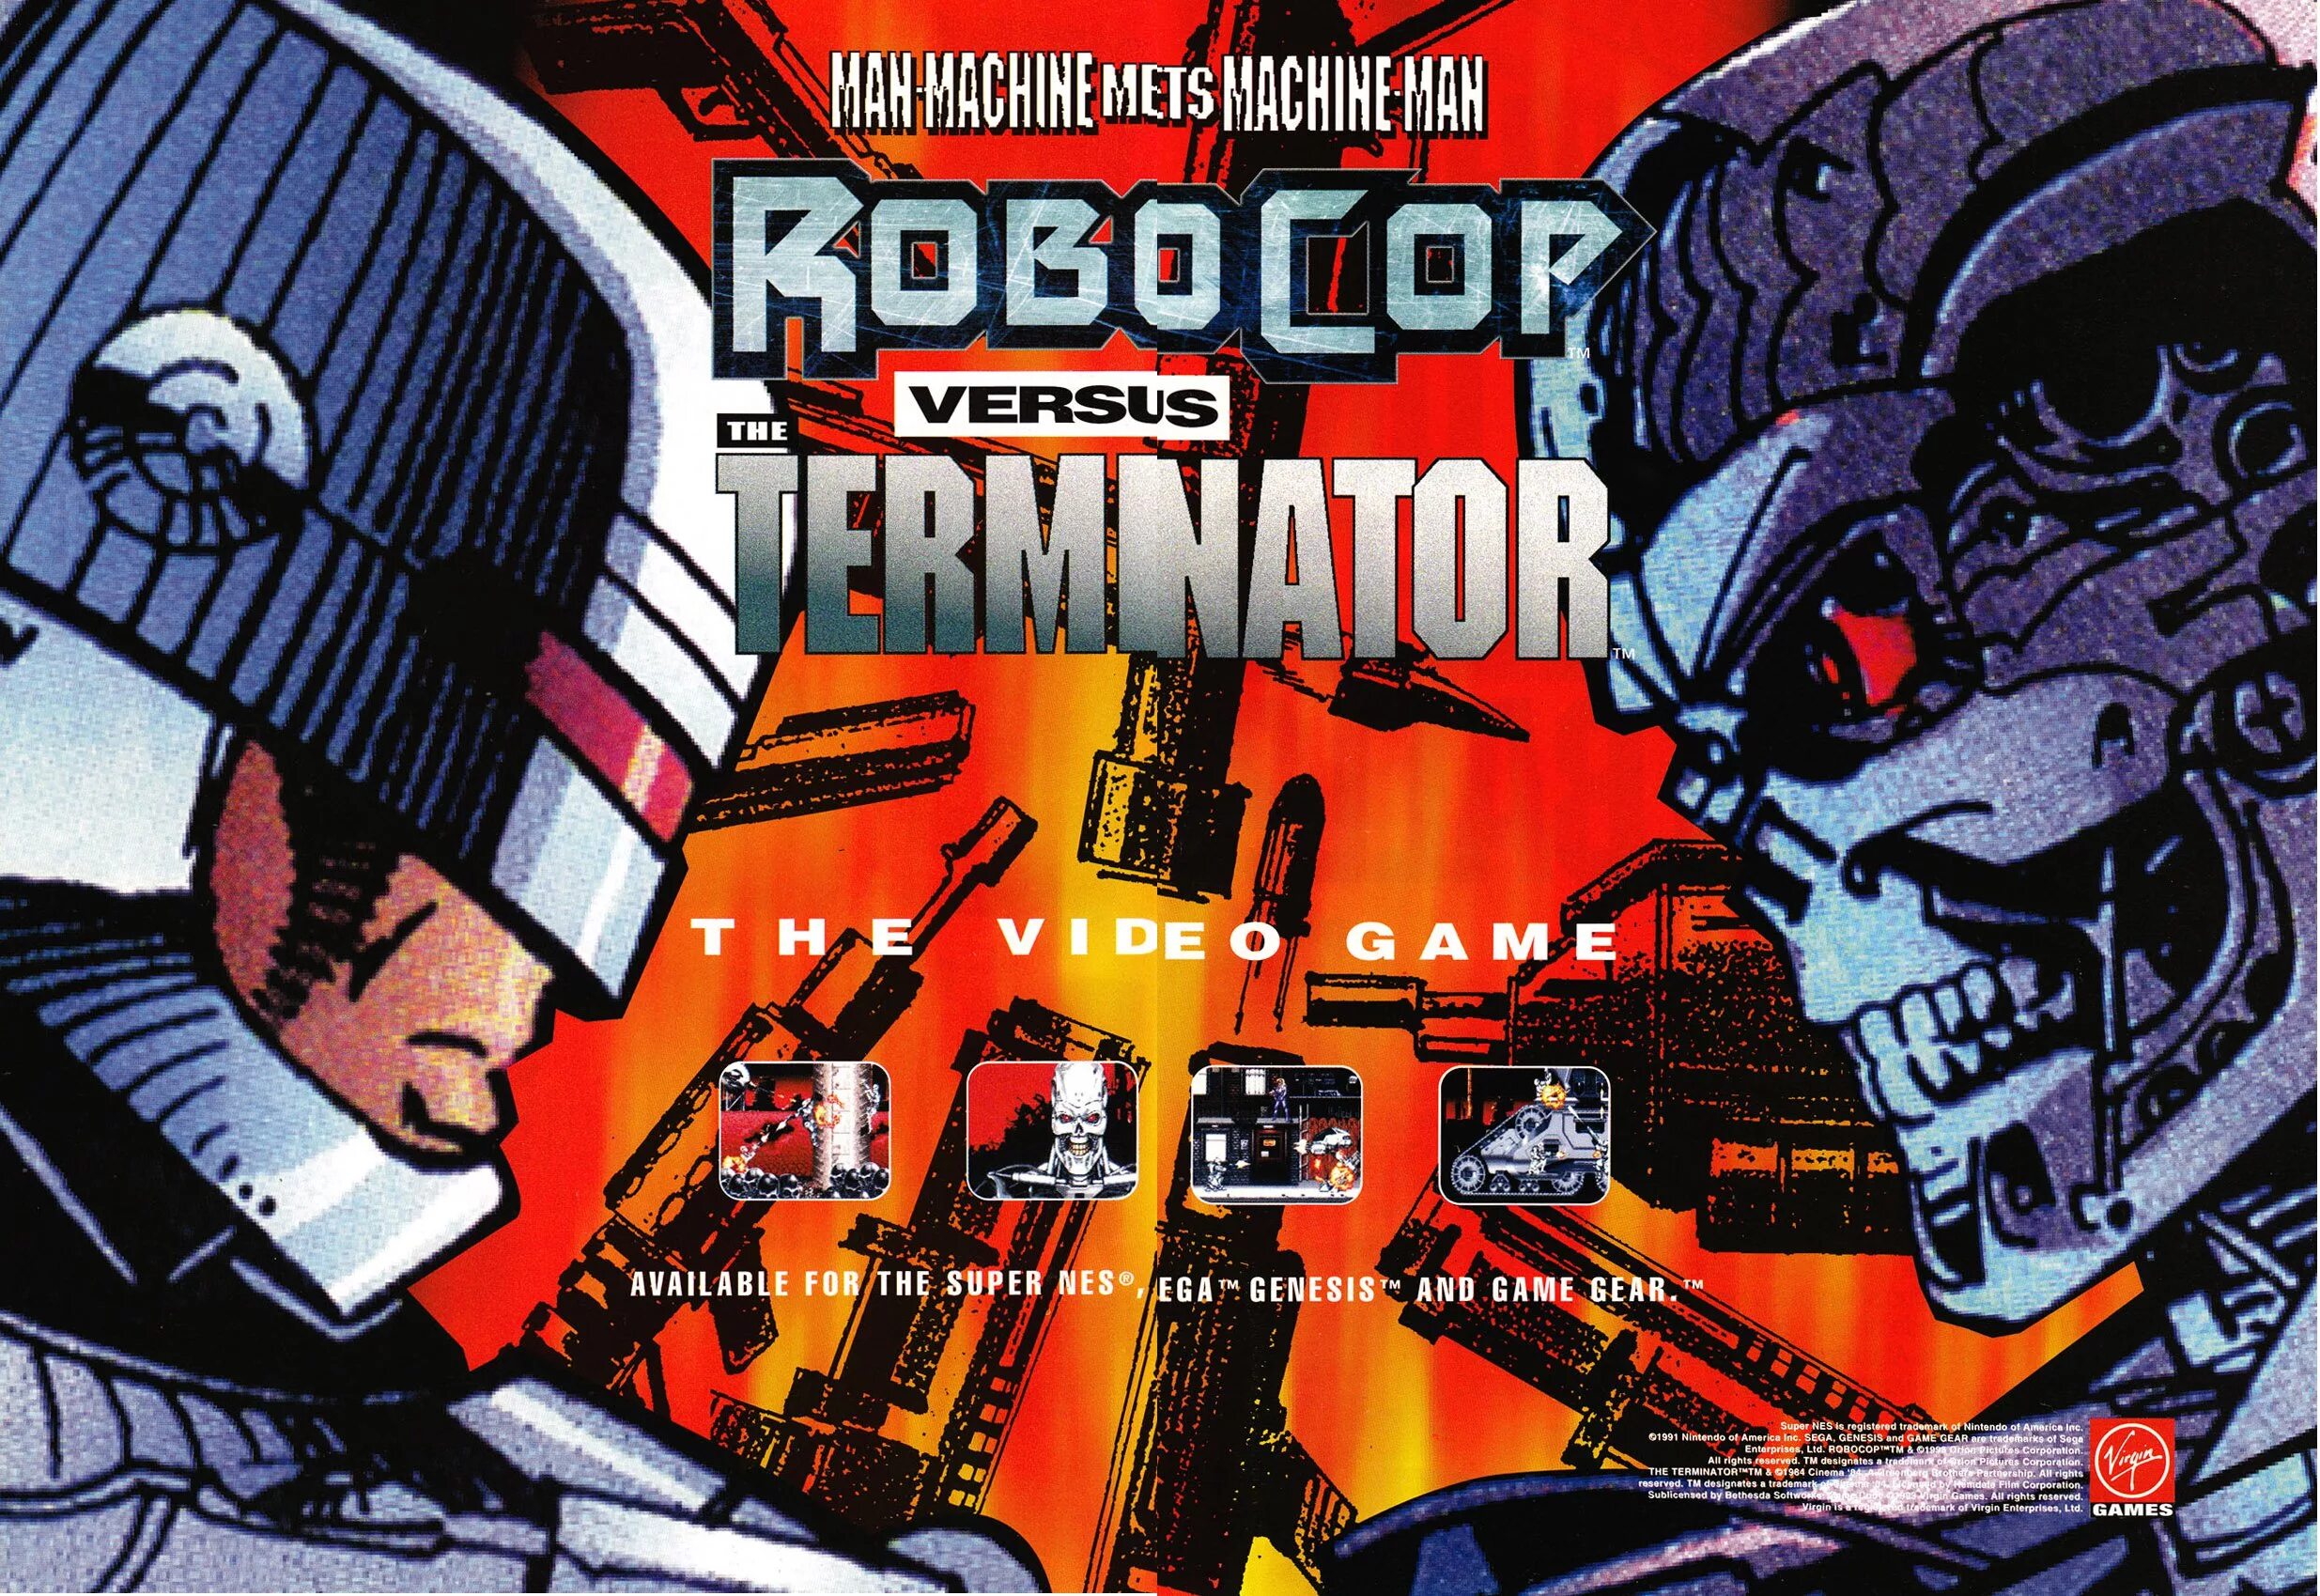 Терминатор 1 Sega. Robocop vs Terminator сега обложка. Игра Sega: Robocop versus Terminator. Robocop vs Terminator игра.